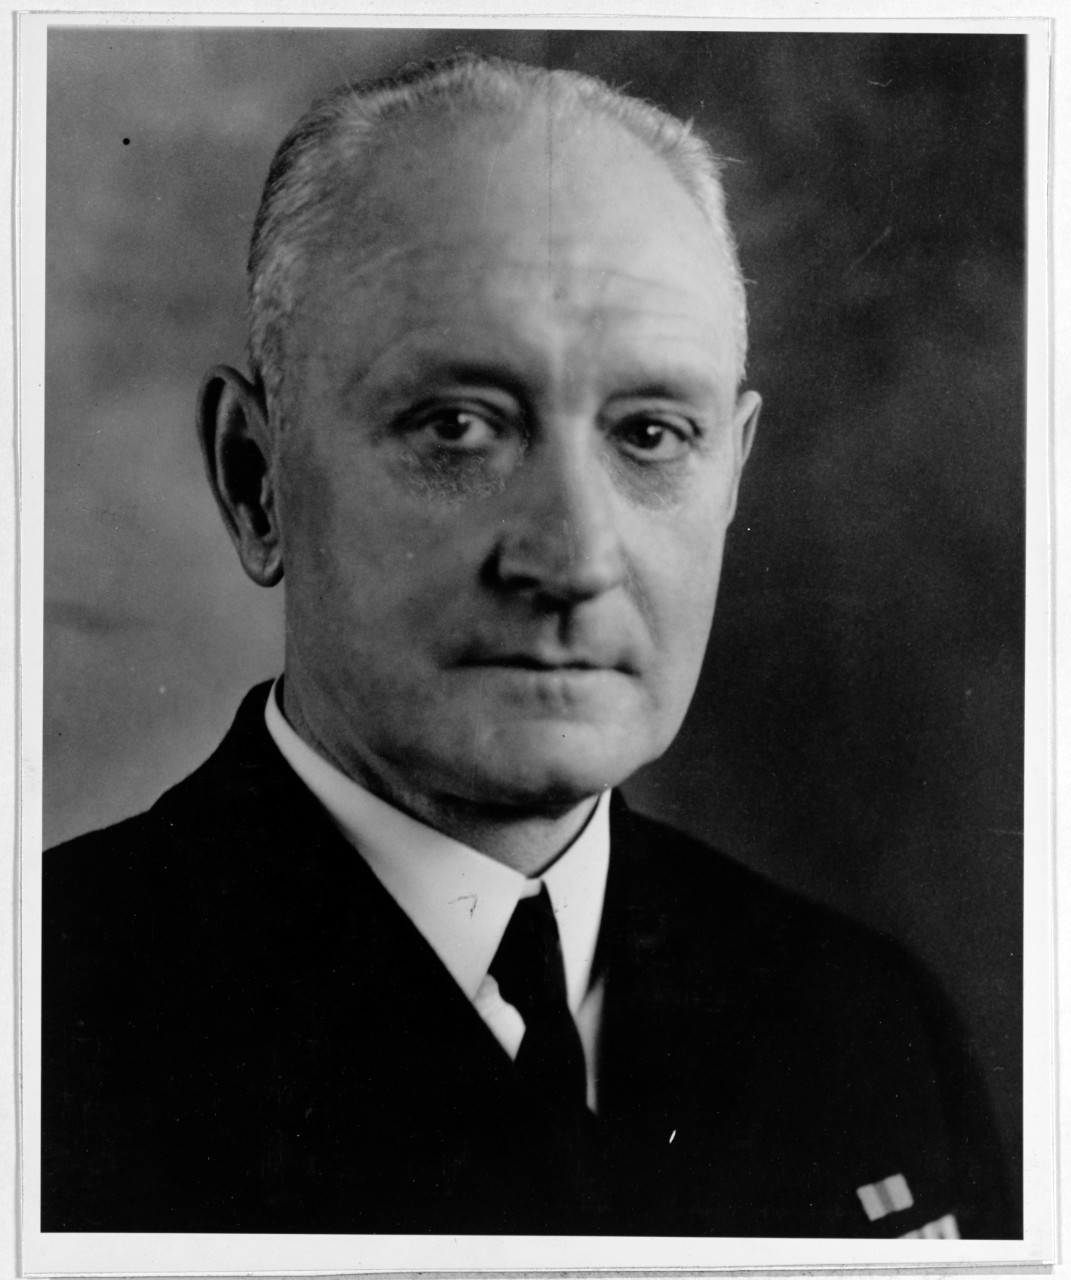 Captain Roscoe F. Dillen, USN